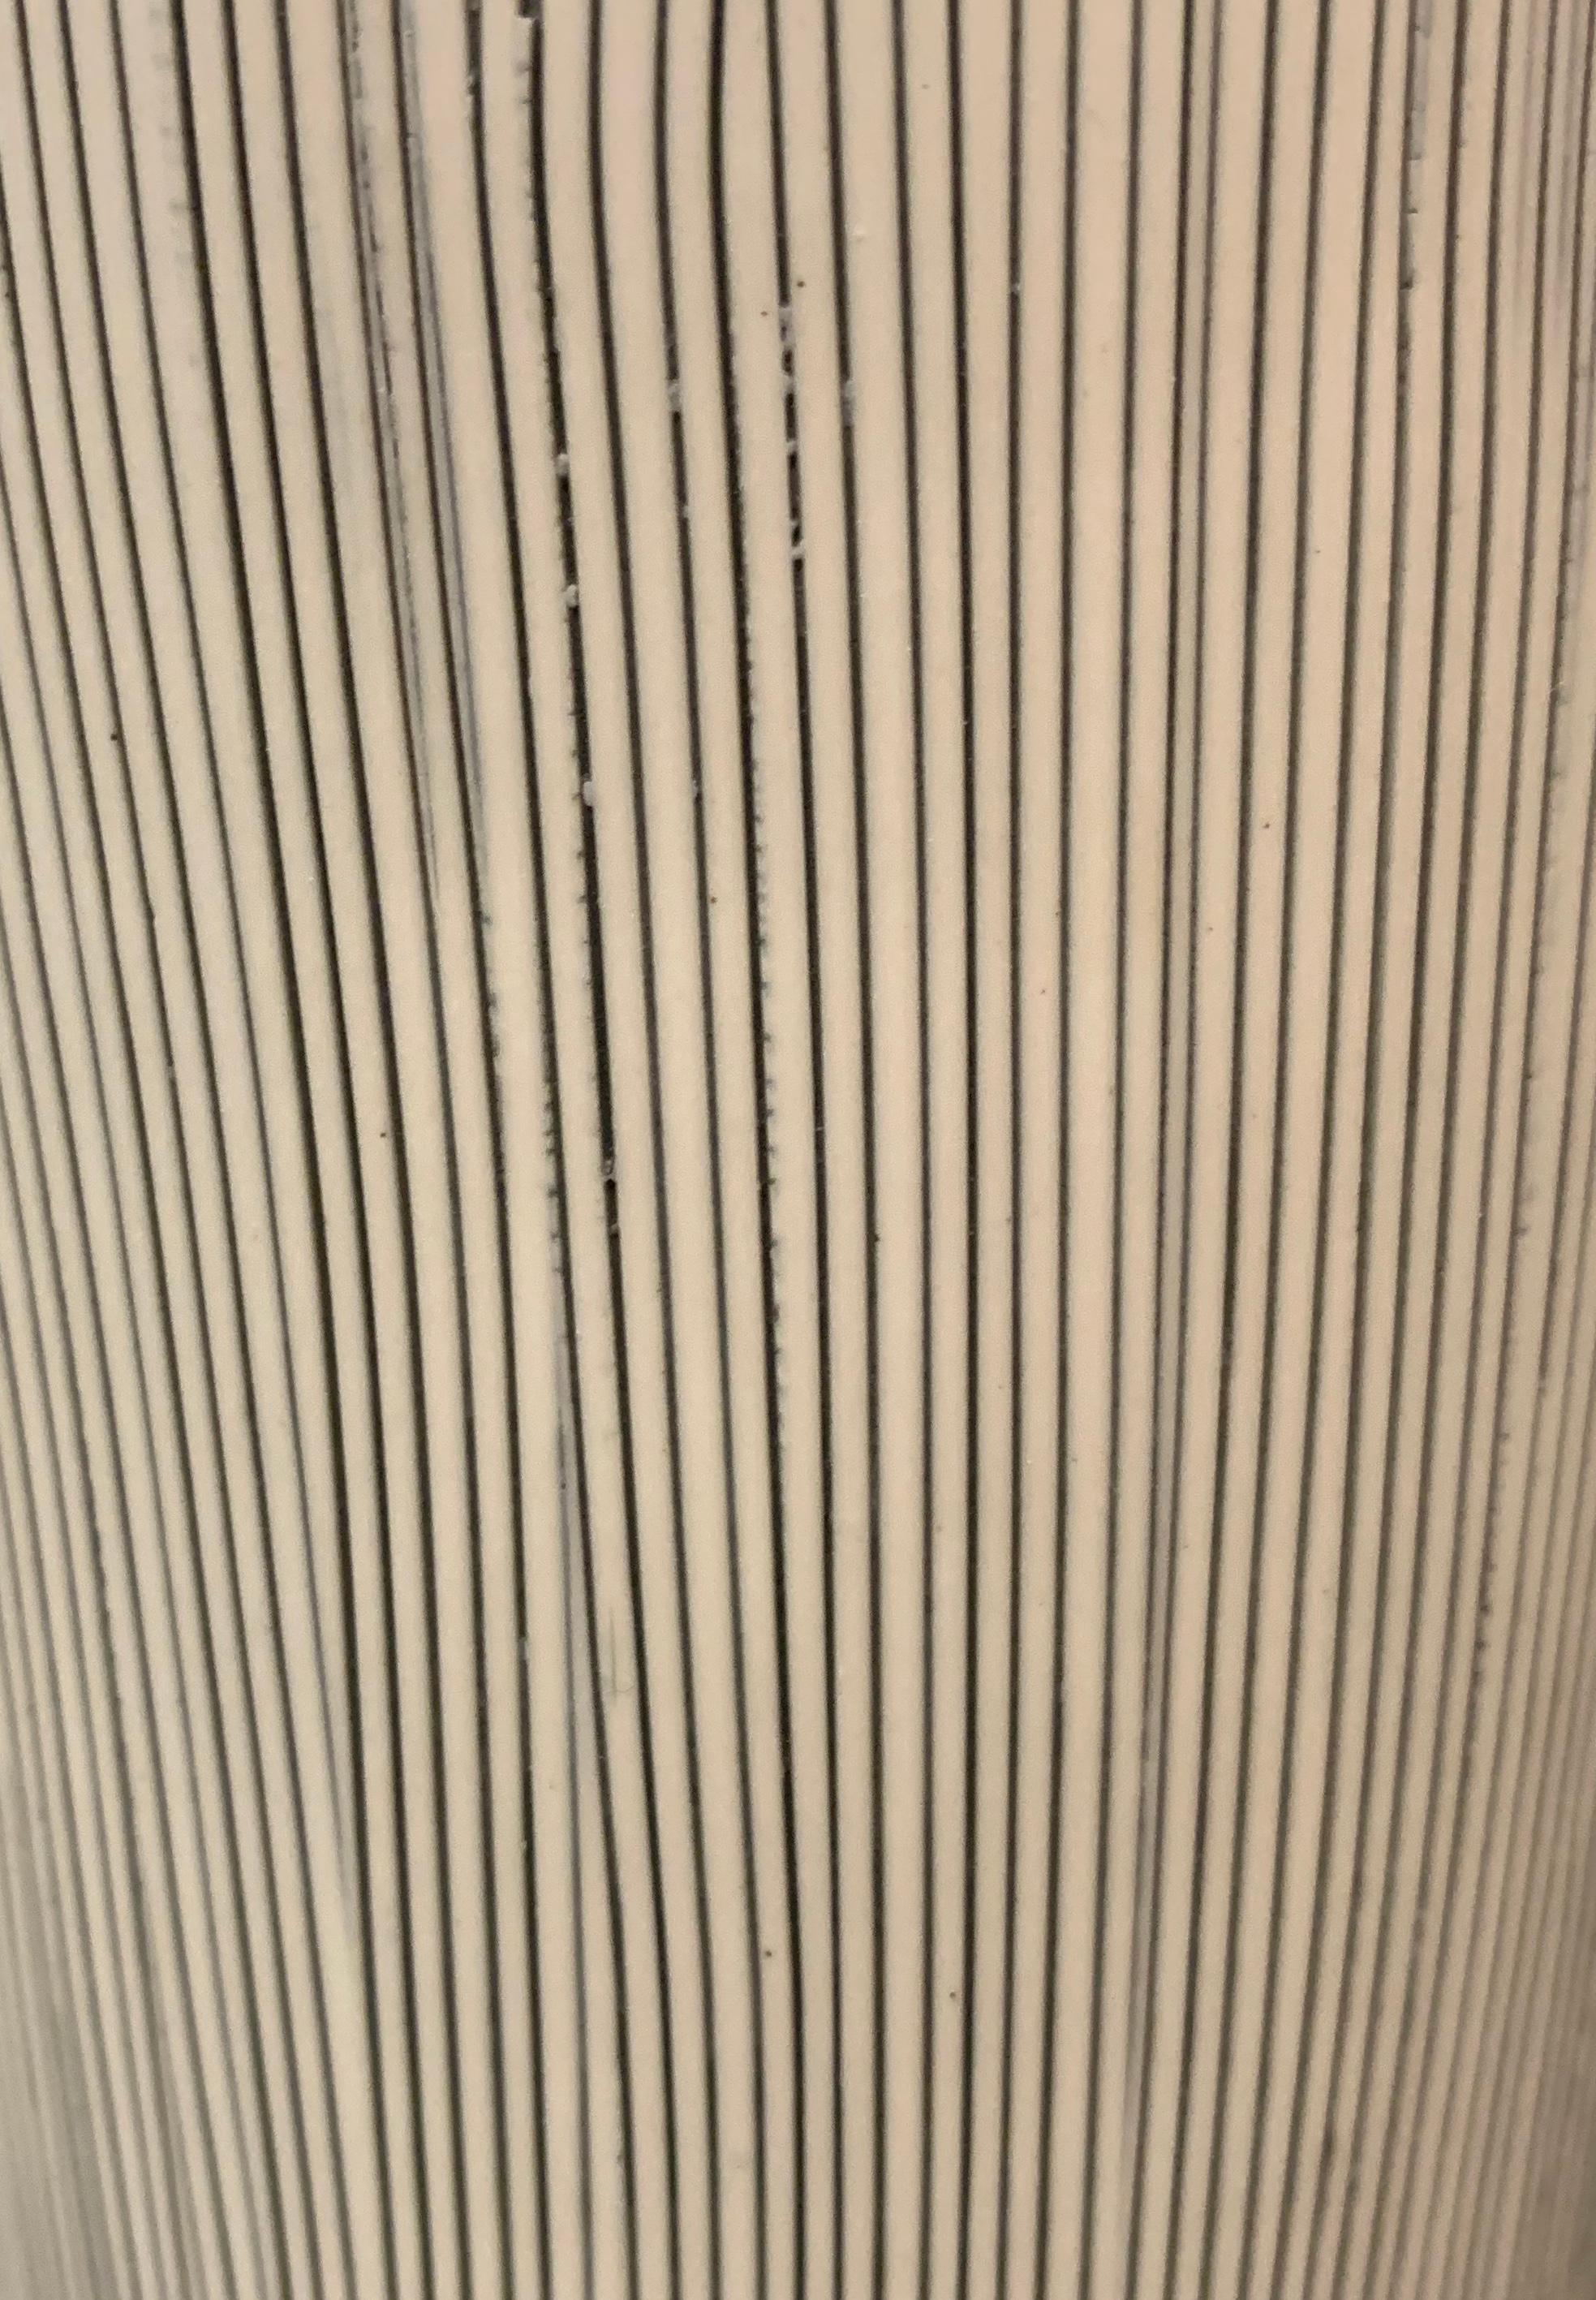 Thai Black Fine Stripe On White Porcelain Cylinder Shape Vase, Contemporary